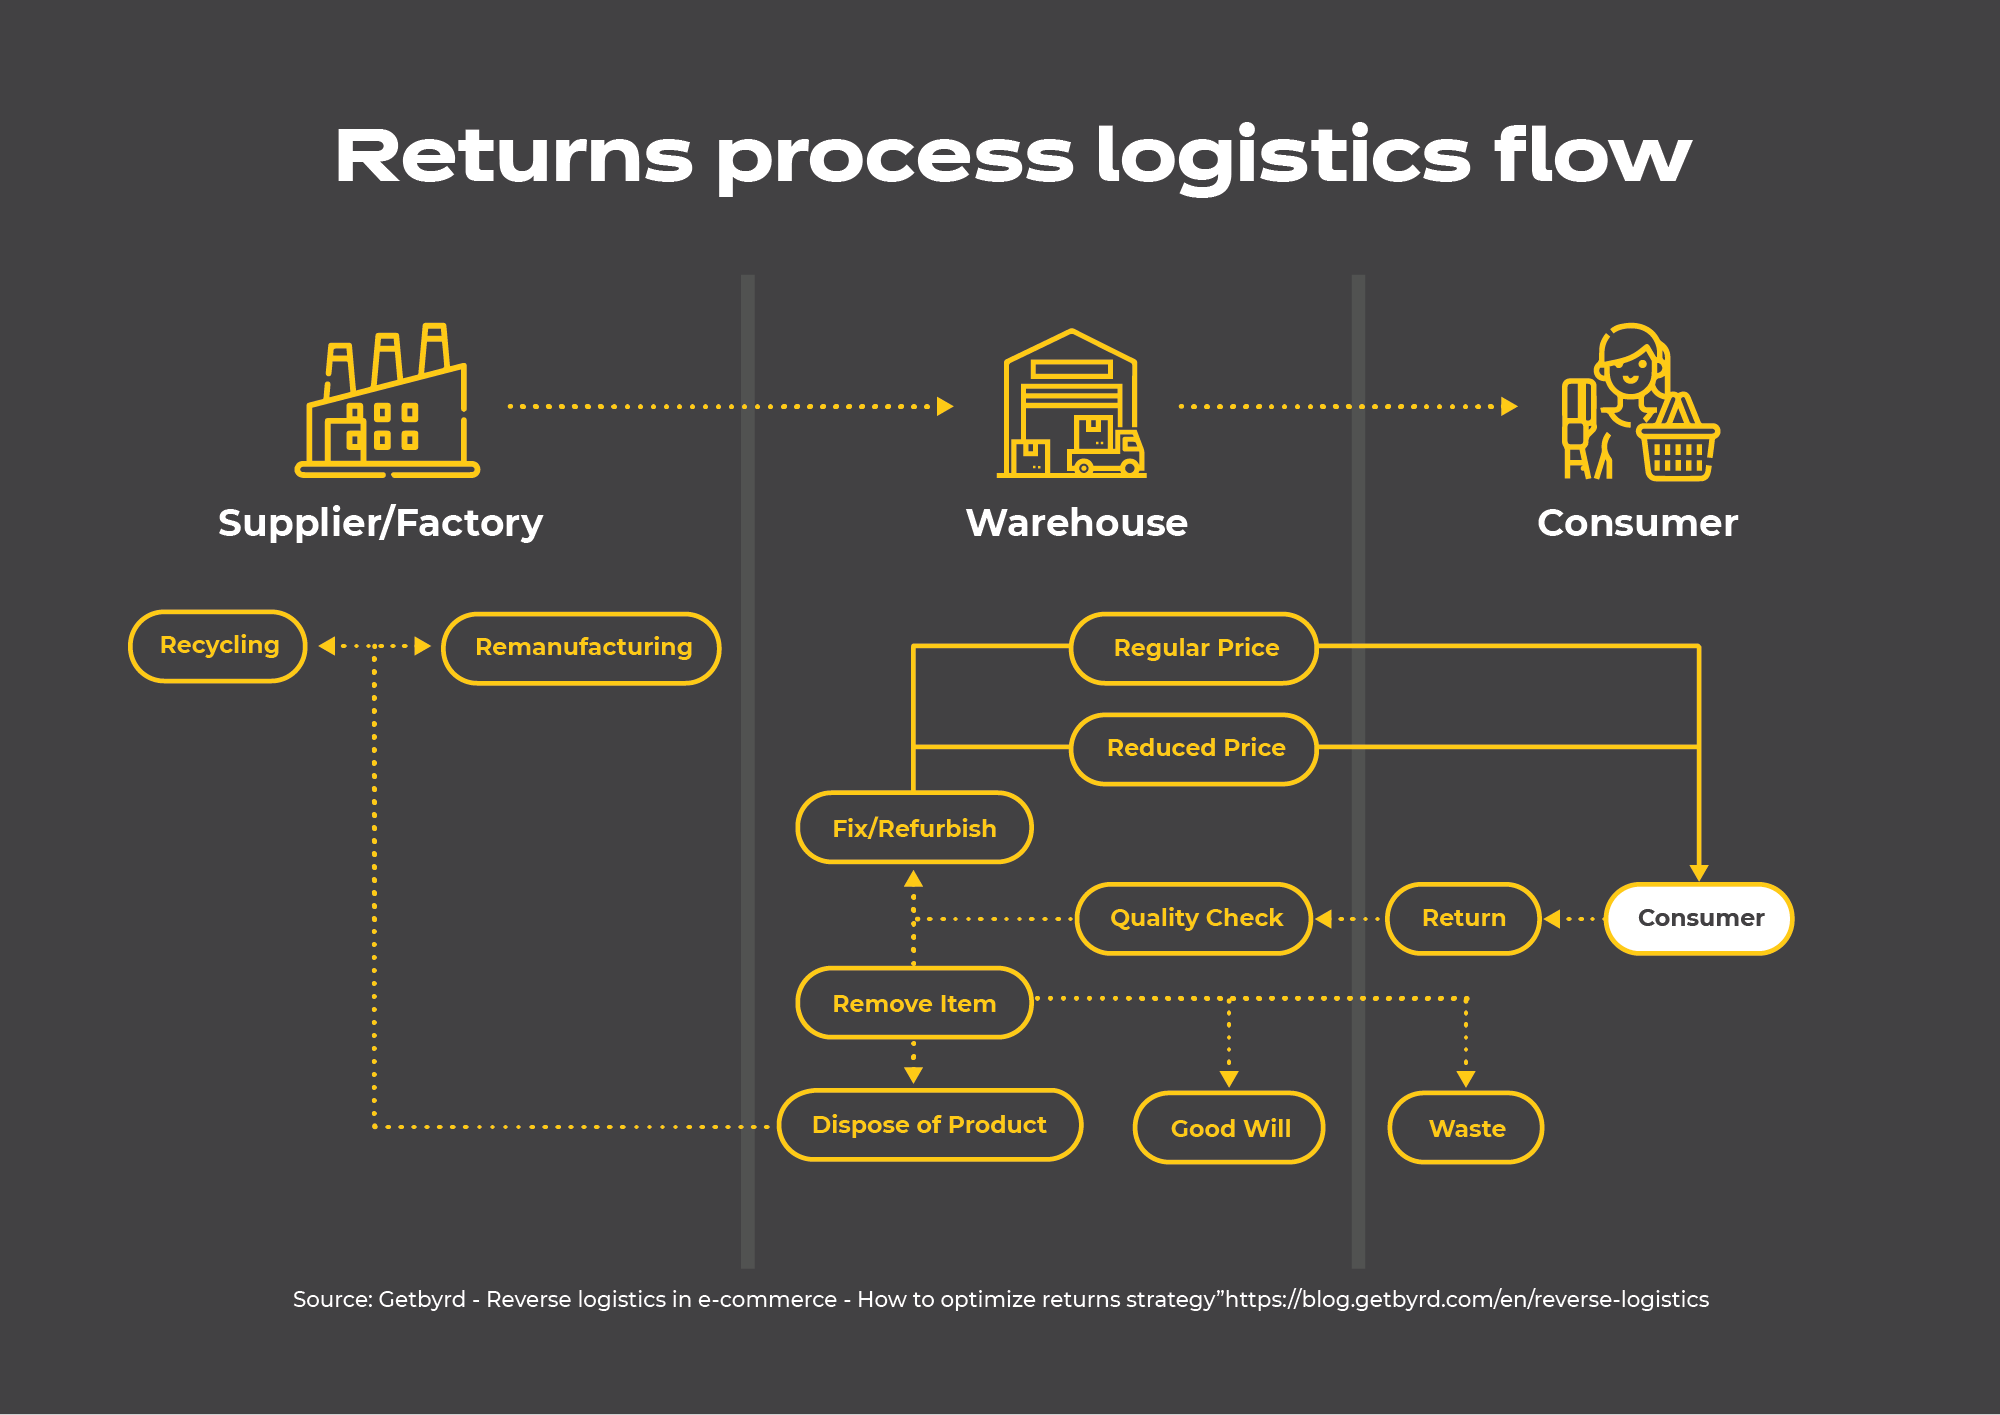 Returns process logistics flow